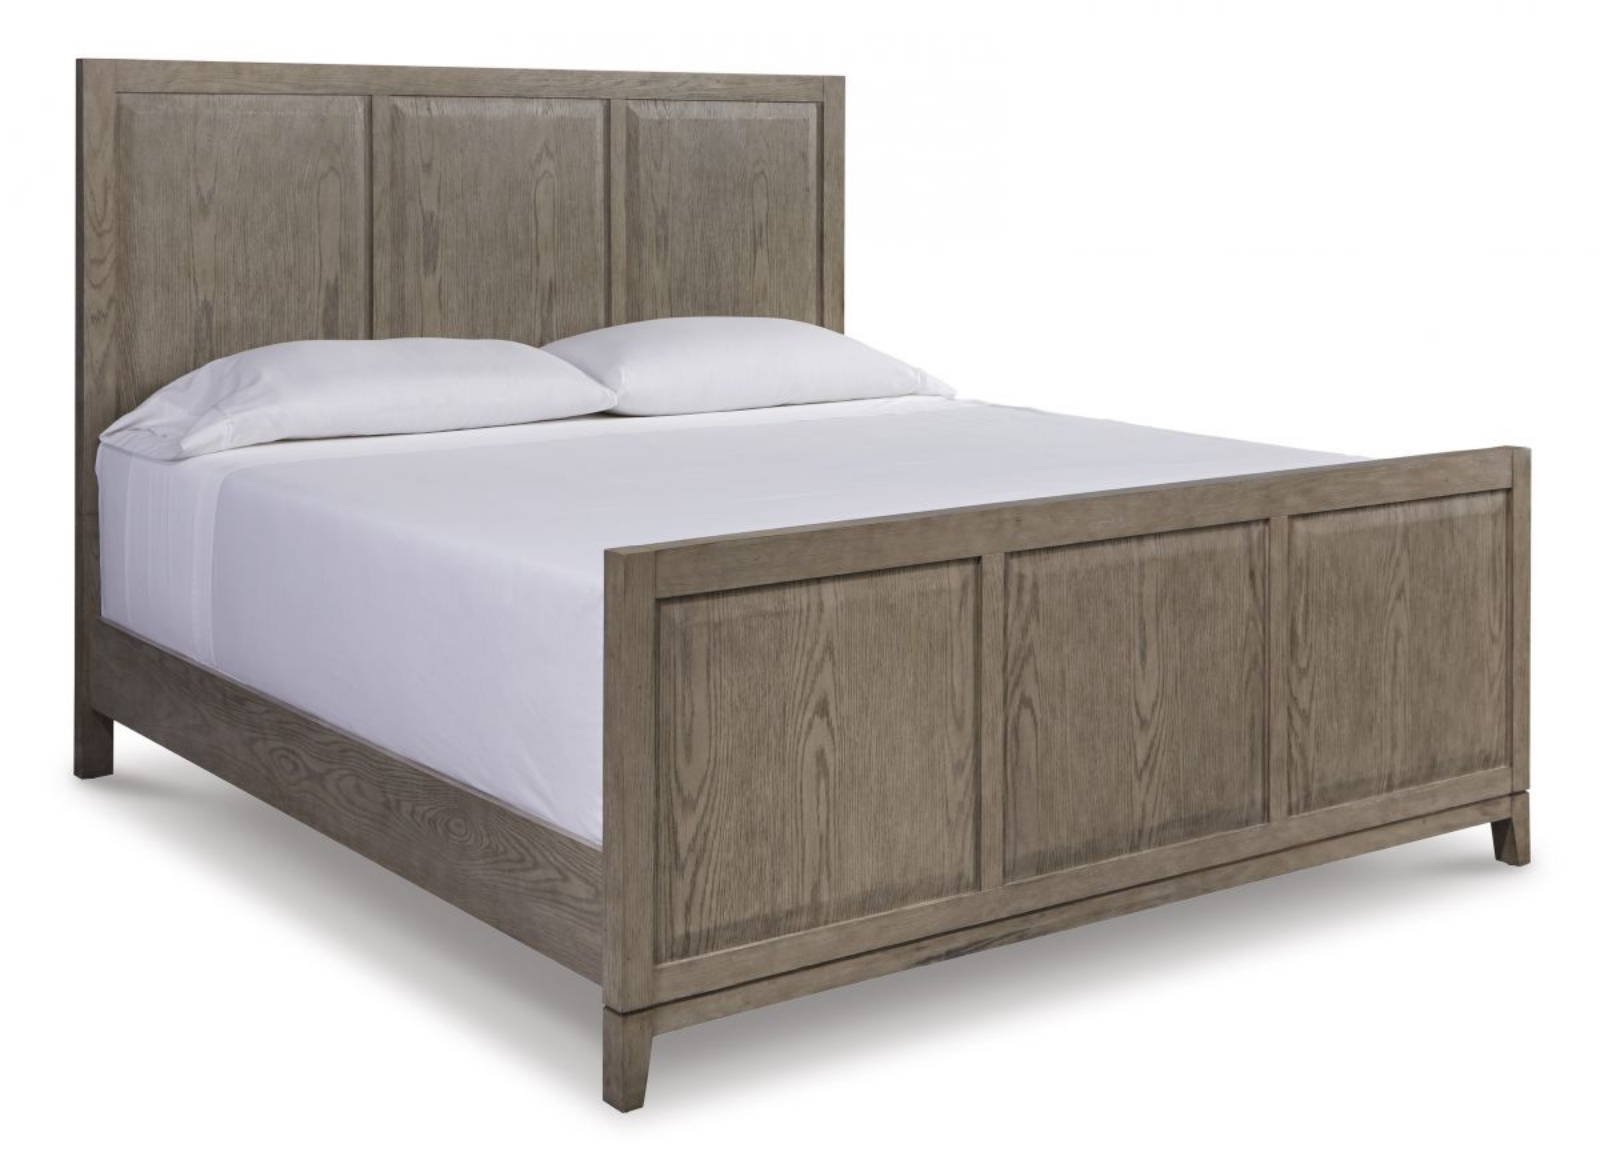 Picture of Chrestner Queen Size Bed